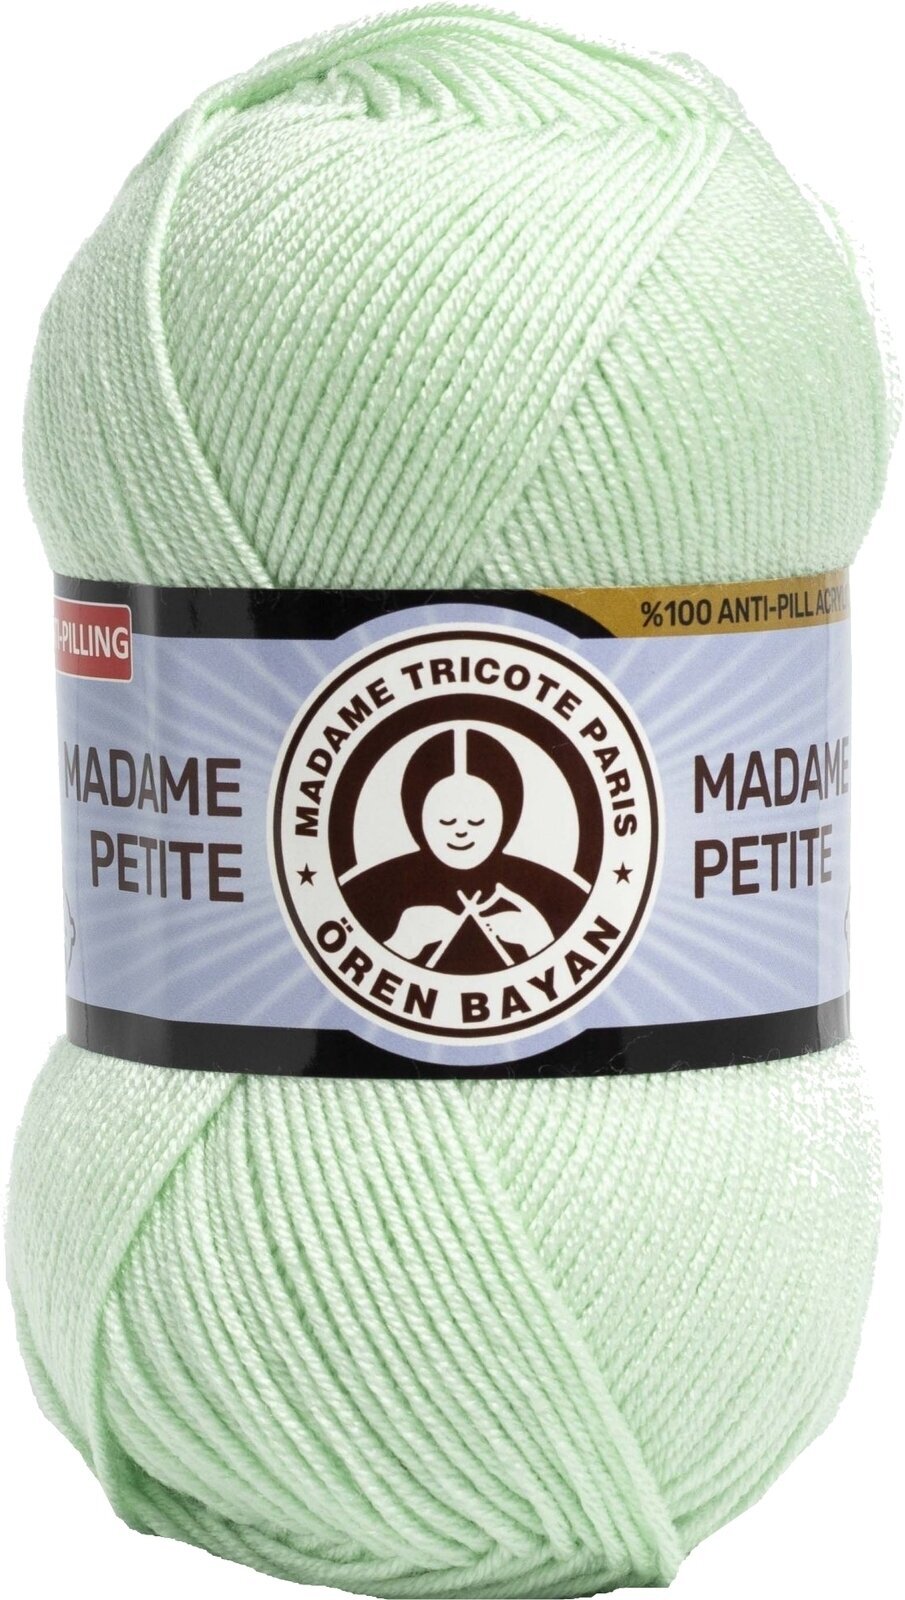 Breigaren Madame Tricote Paris Madame Petite 3848 90 Breigaren